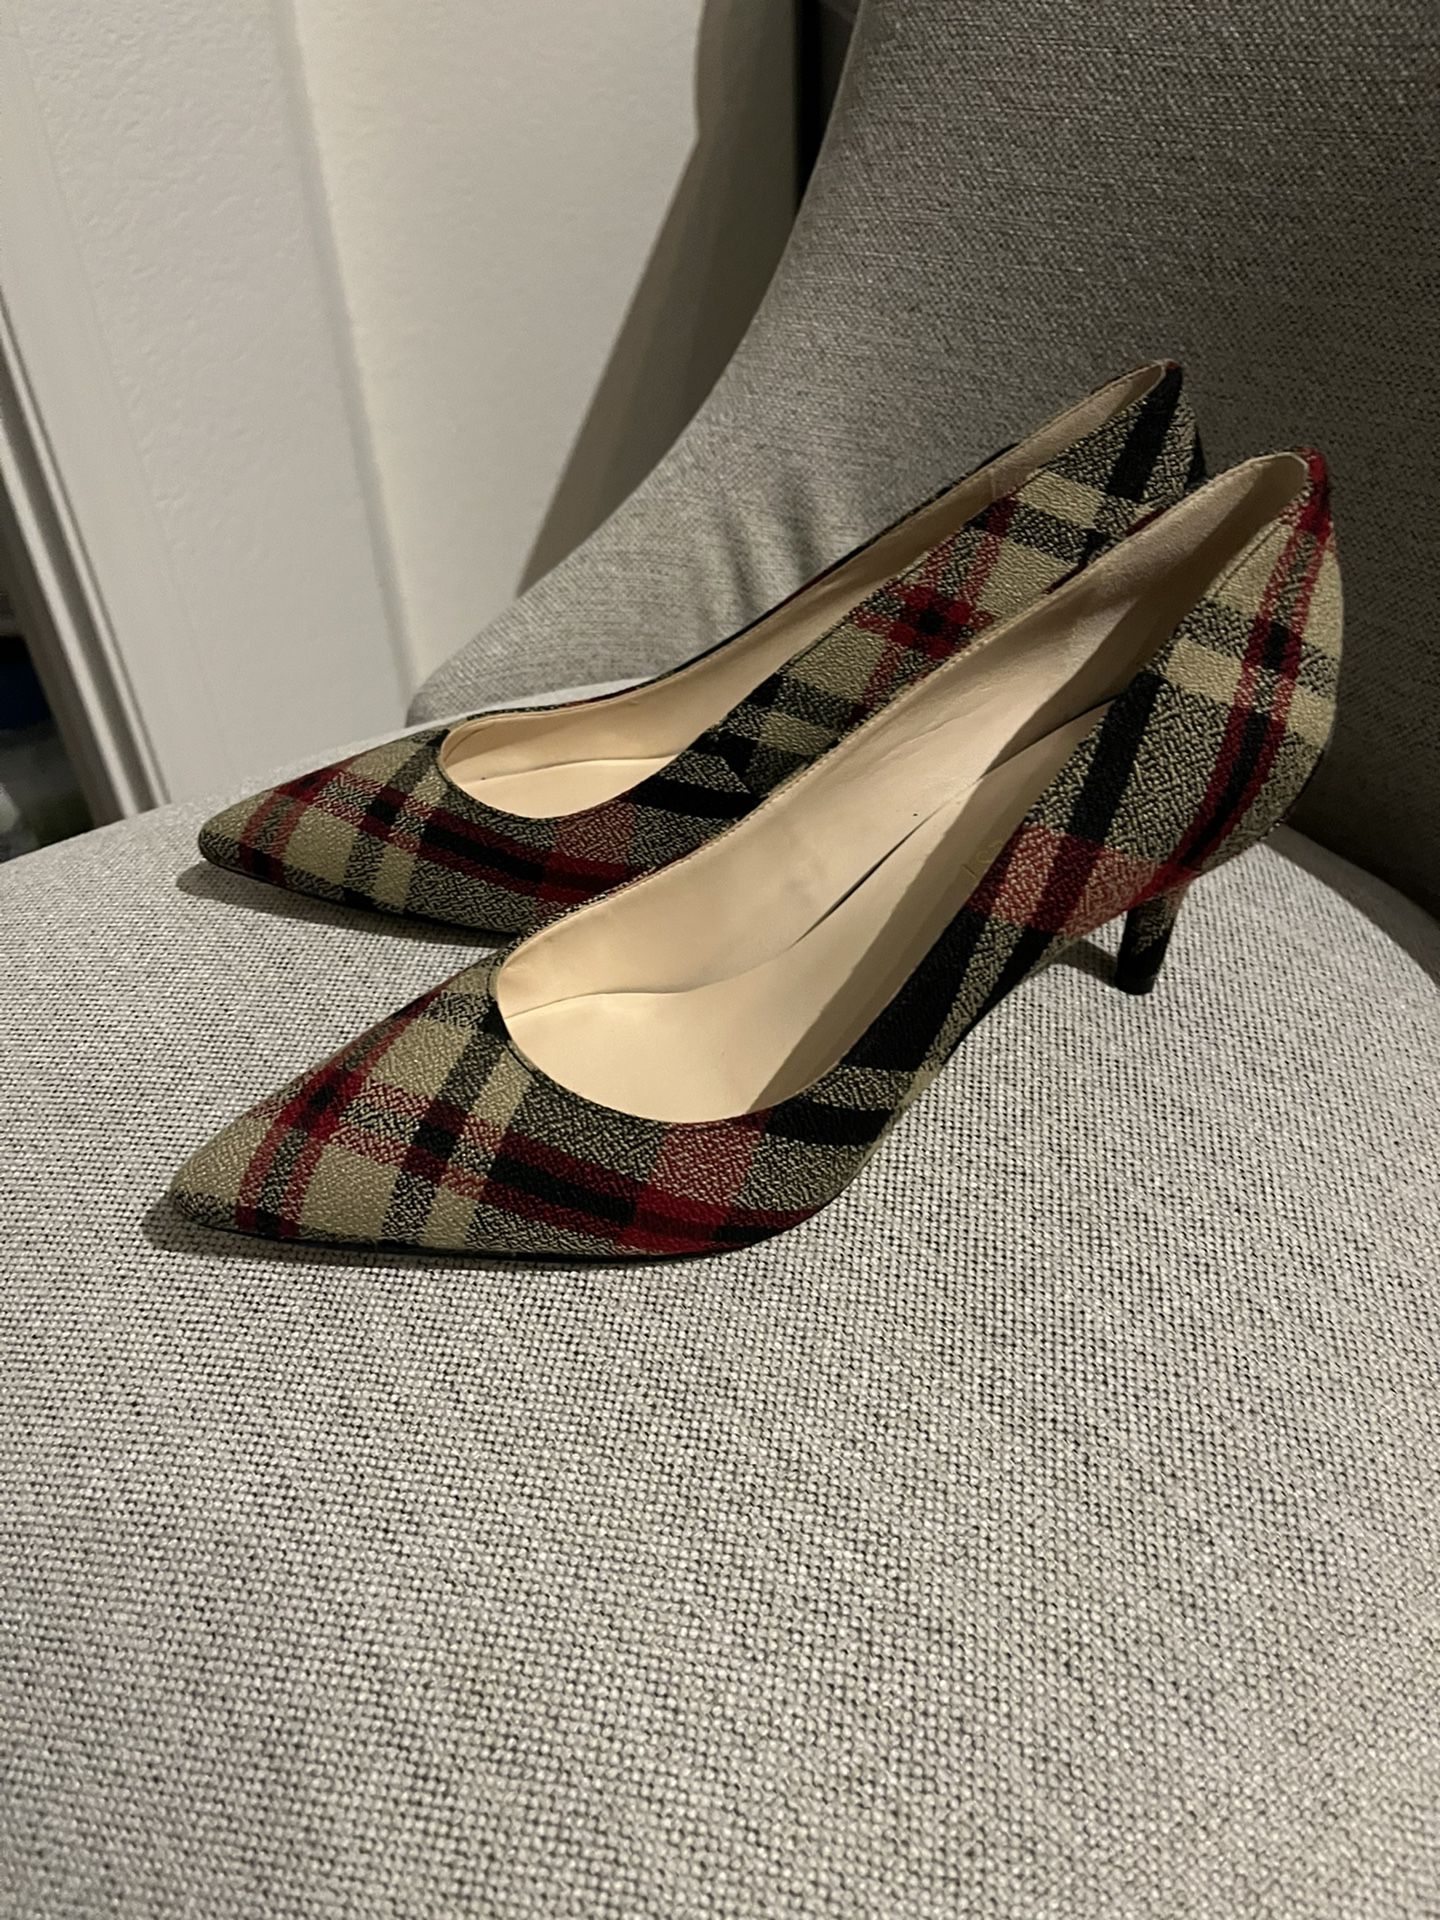 Ladies Shoes - Nine West Heels (New, Size 6-1/2)